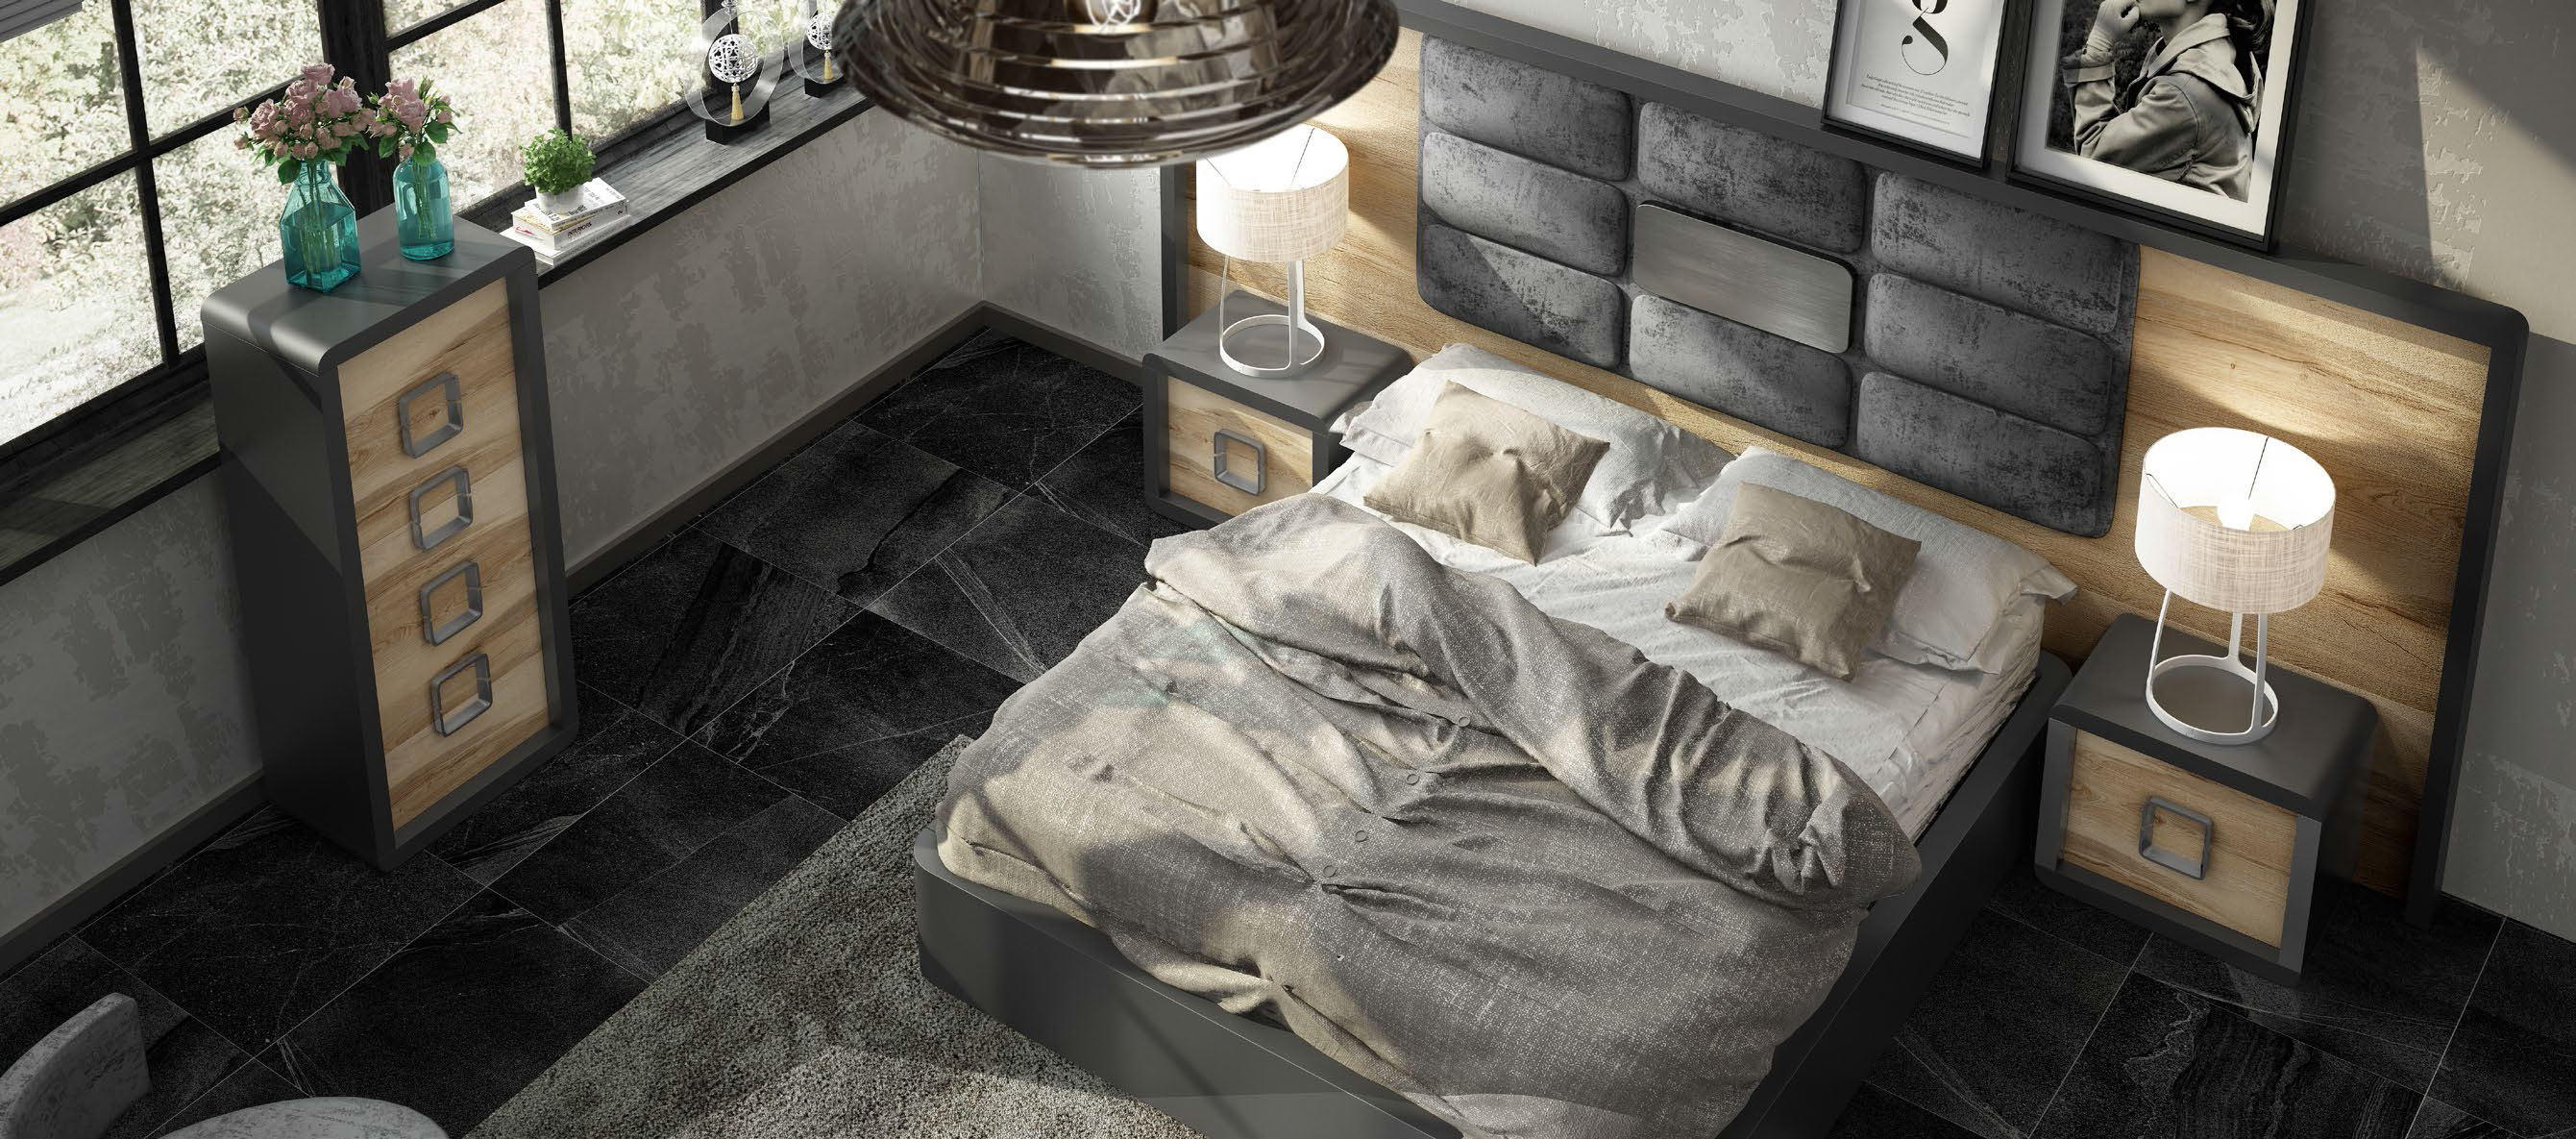 Brands Franco Furniture Bedrooms vol2, Spain DOR 173